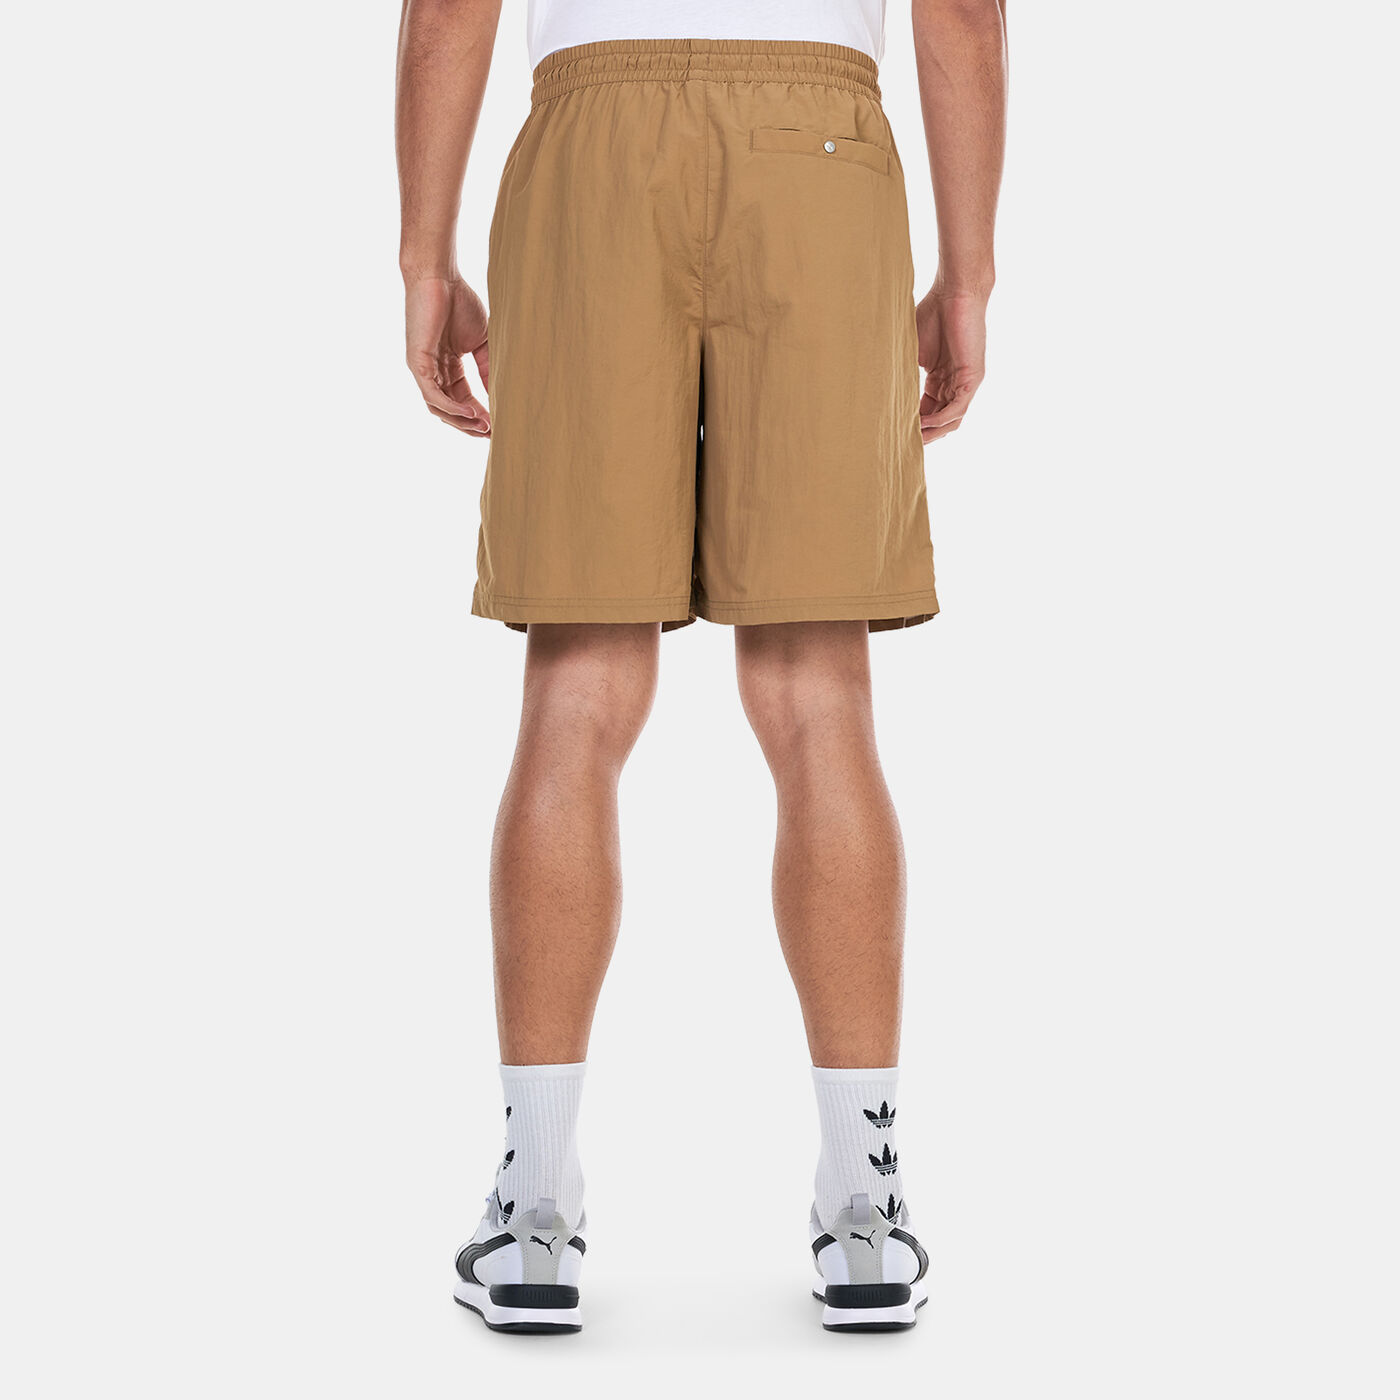 Men's TEAM Woven Shorts